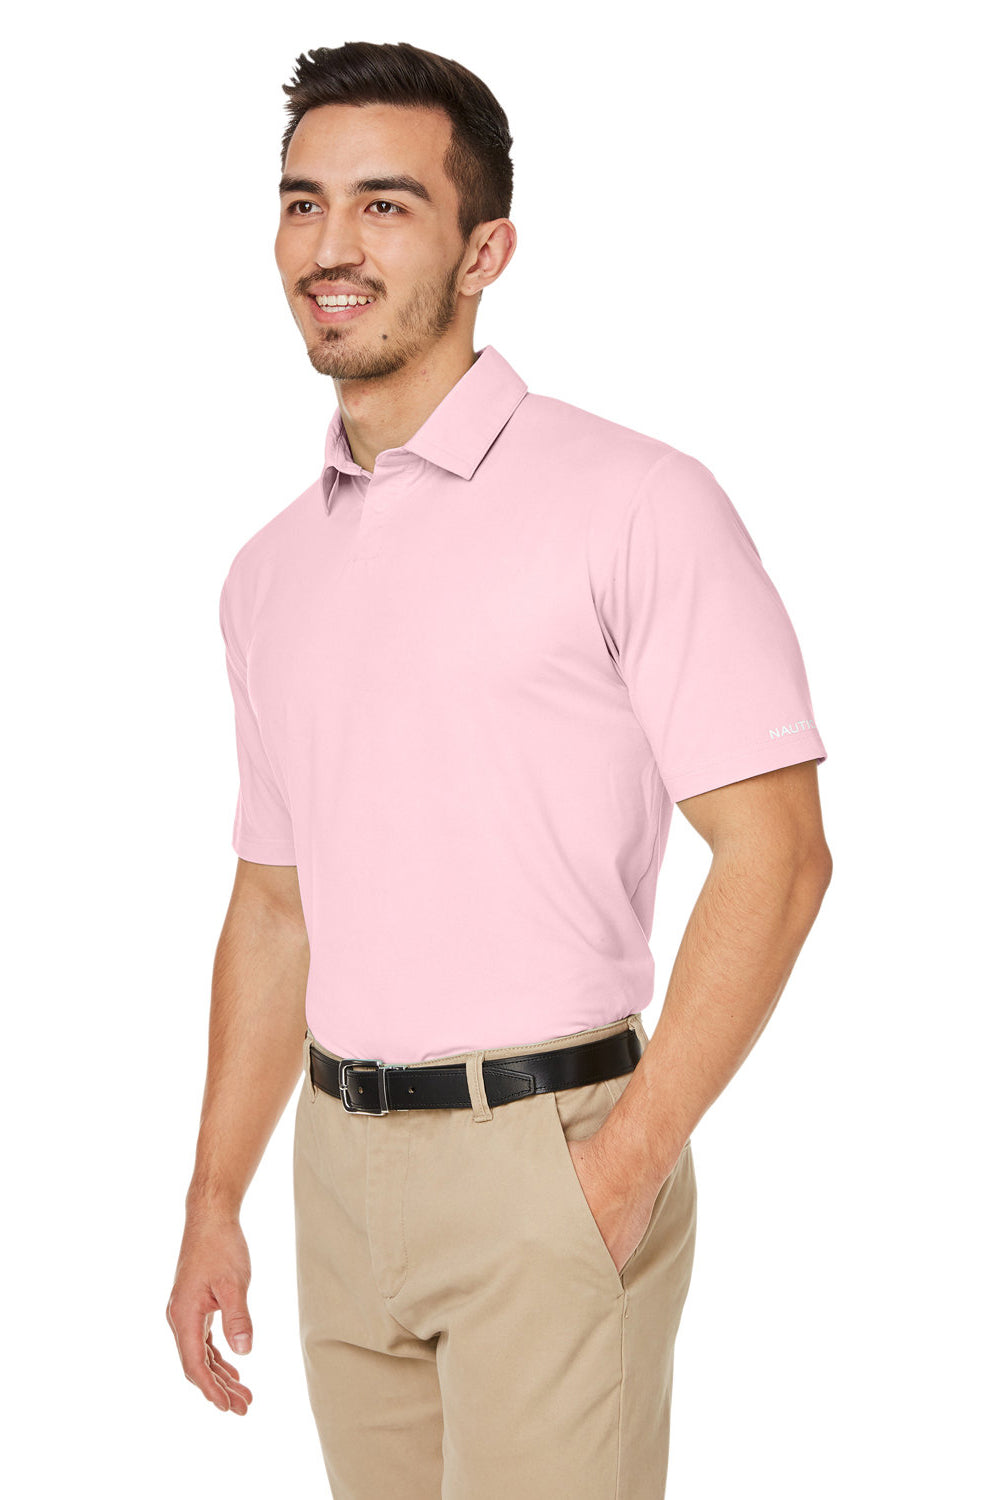 Nautica N17922 Mens Saltwater Short Sleeve Polo Shirt Sunset Pink 3Q